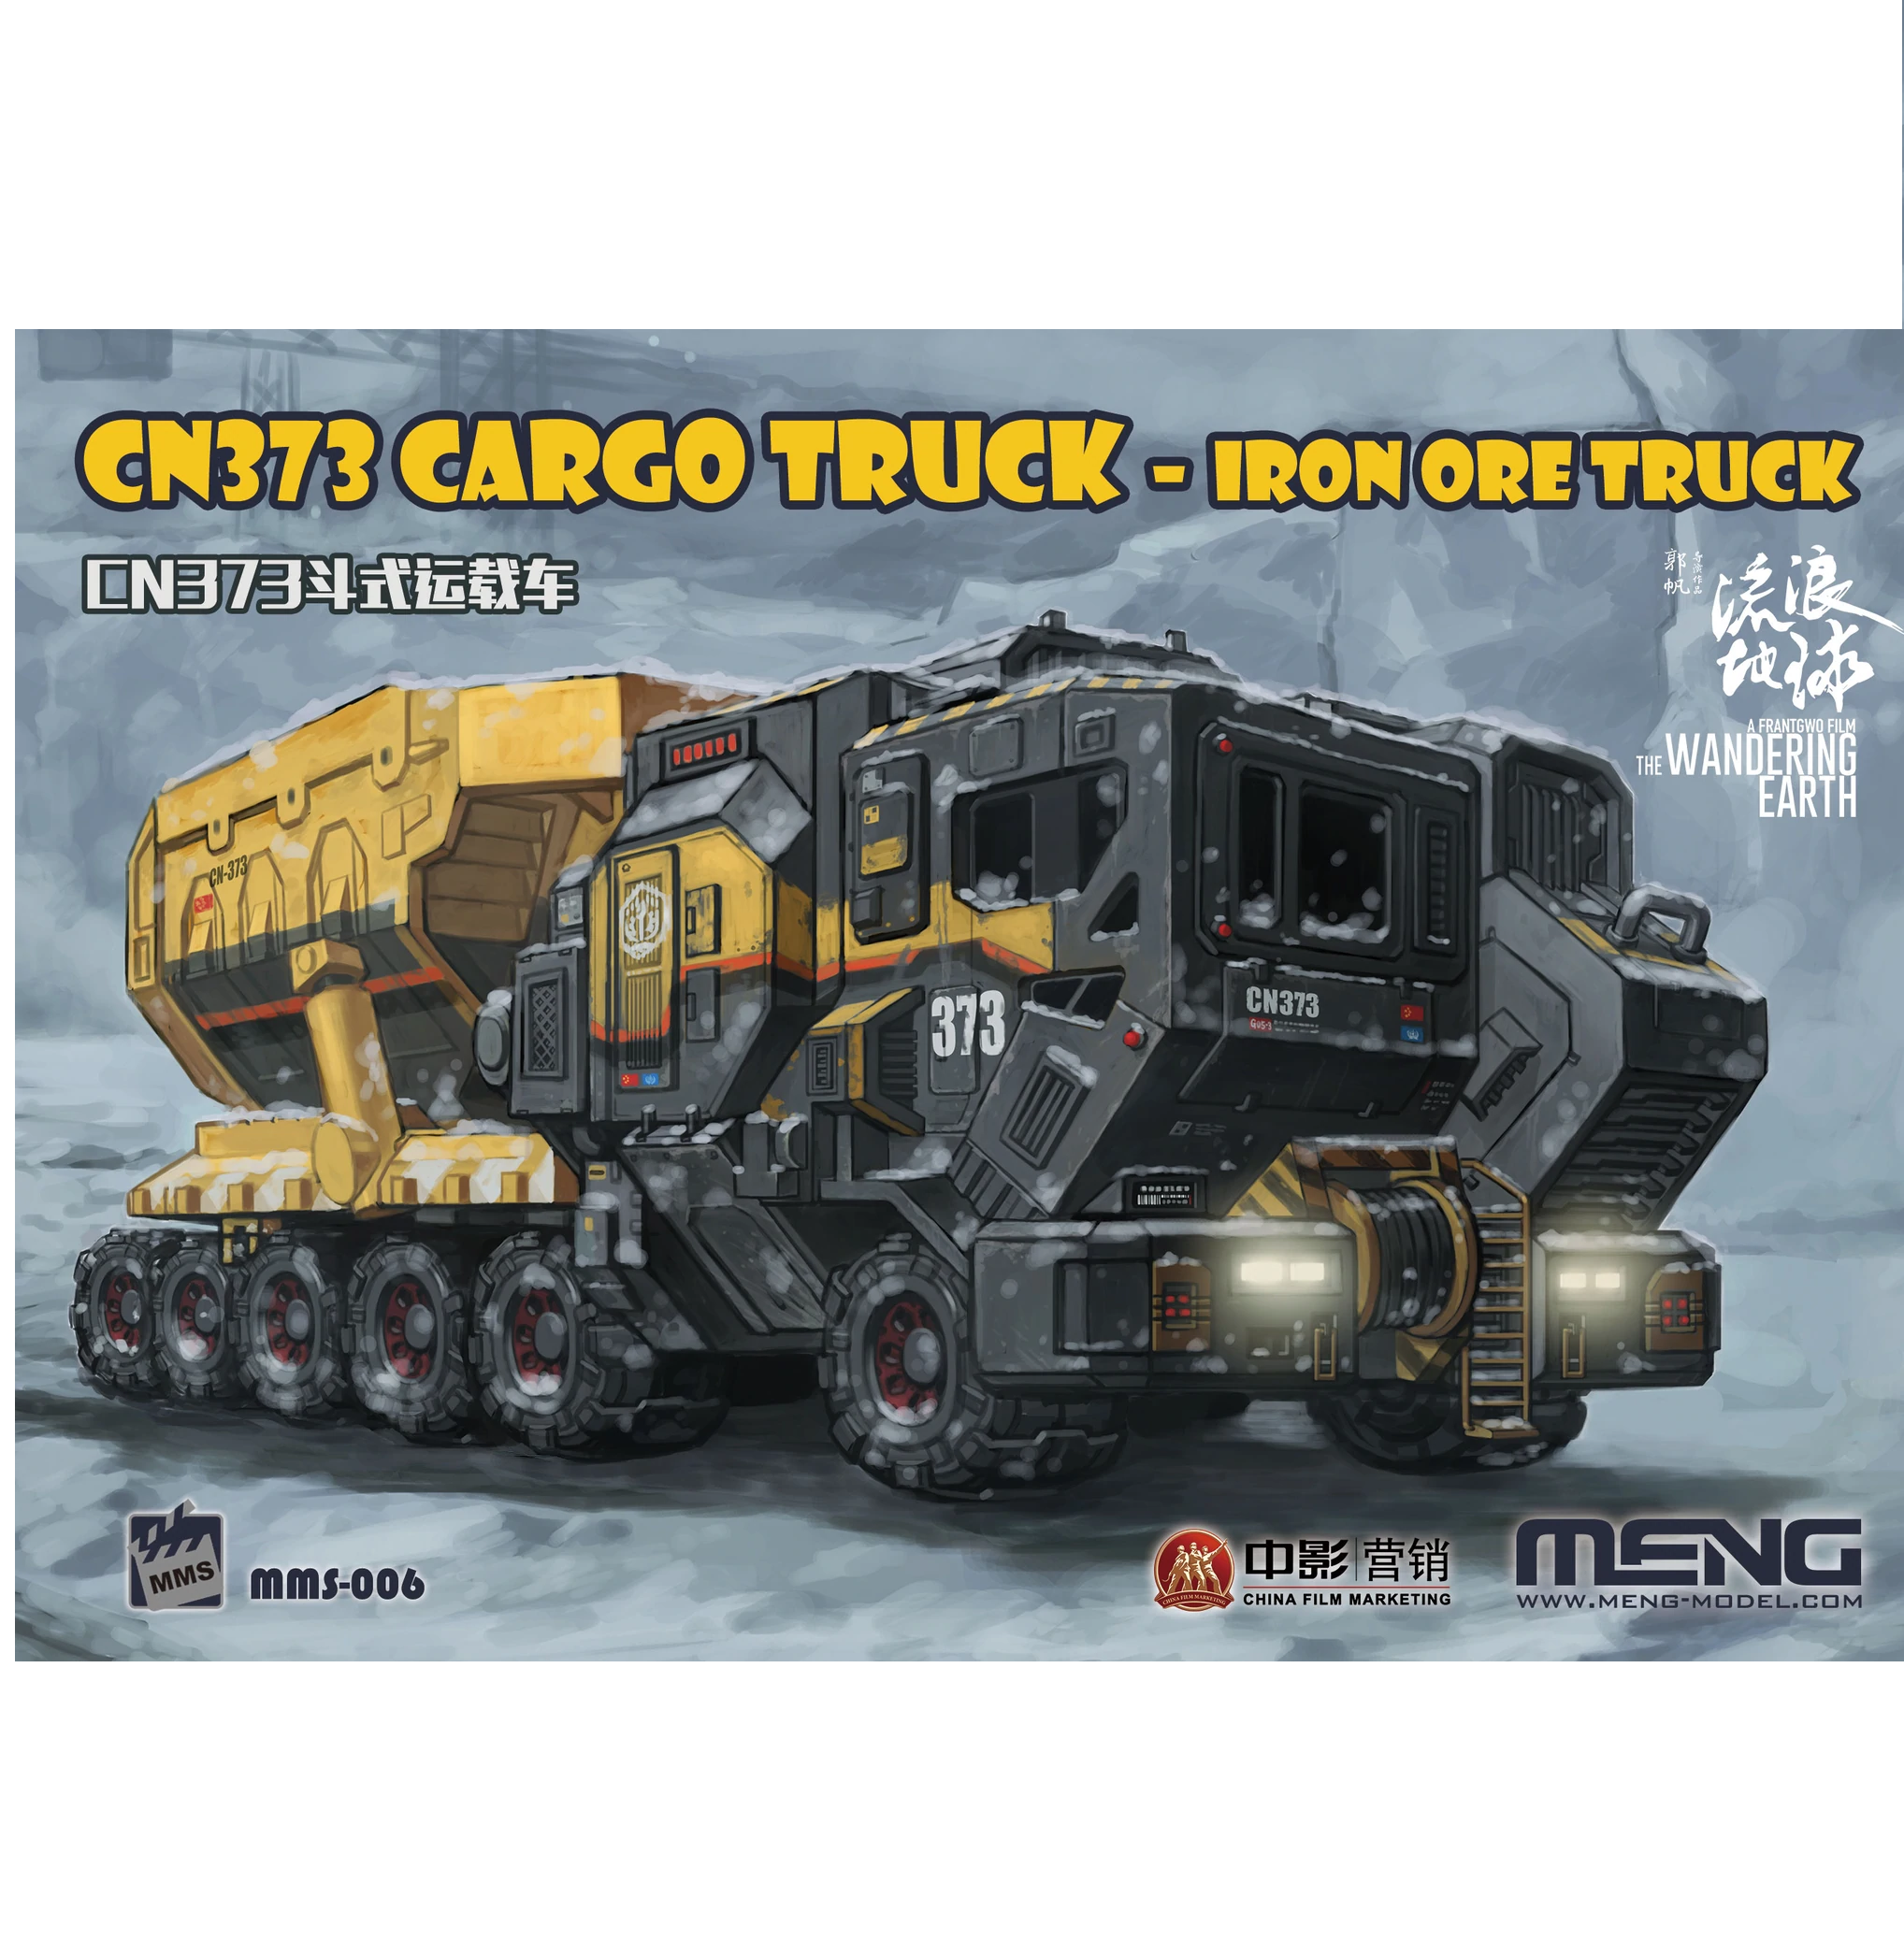 CN373 Cargo Truck - Iron Ore Truck | Event Horizon Hobbies CA